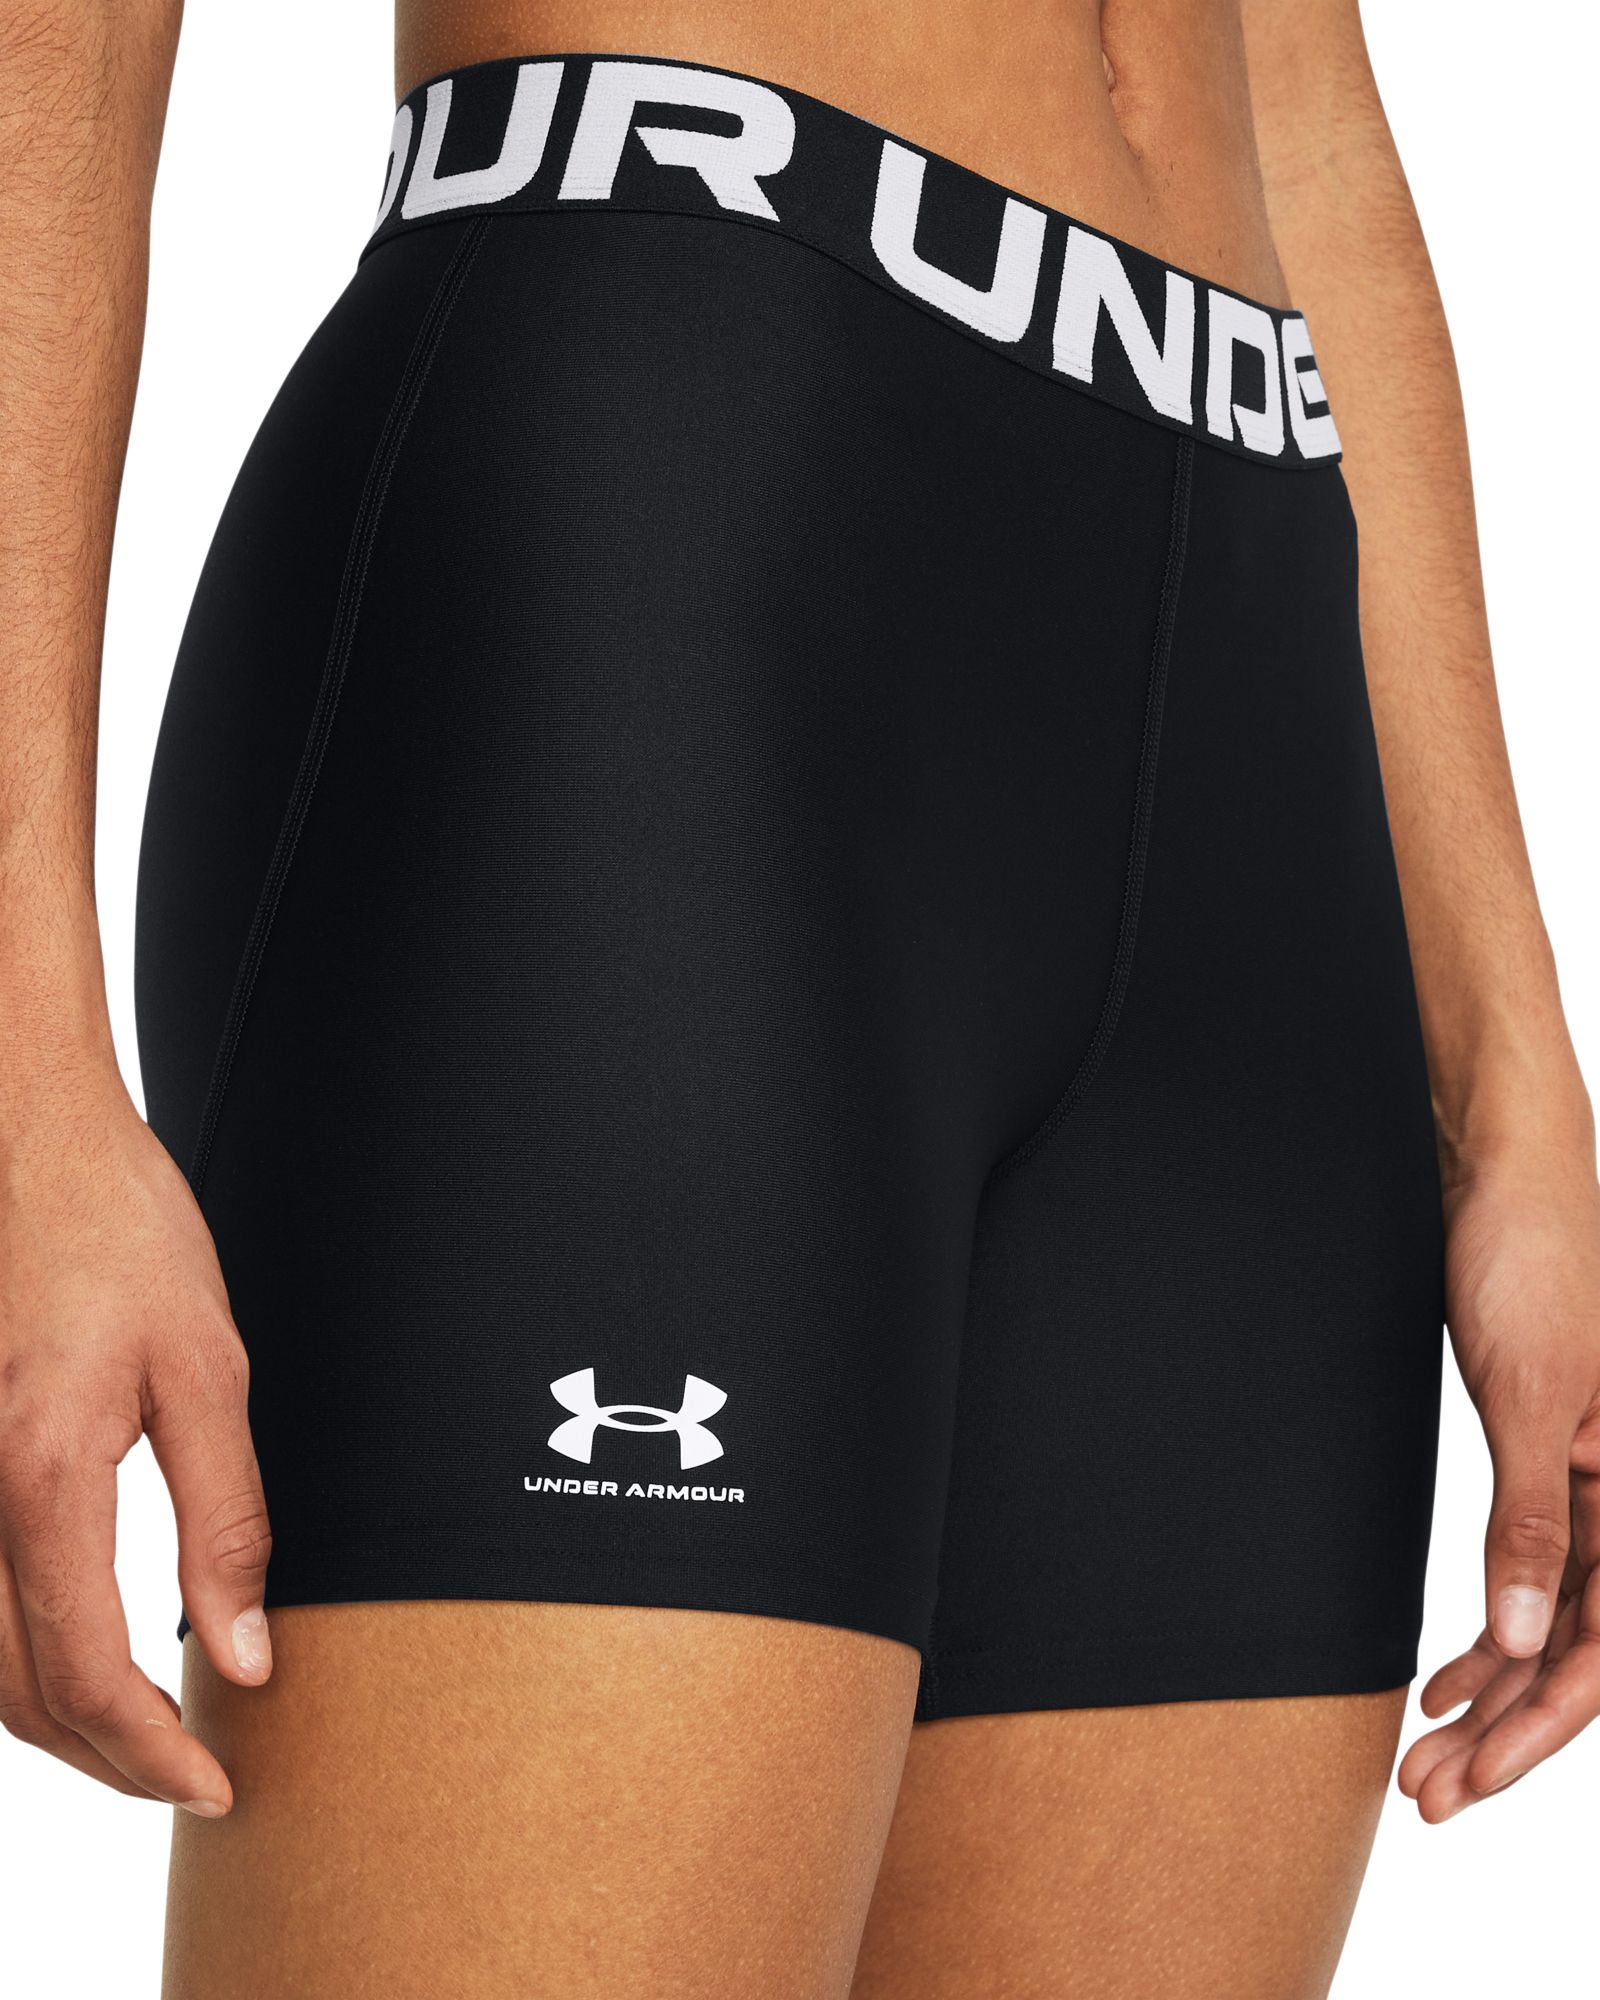 Yoga Spandex Shorts  DICK's Sporting Goods